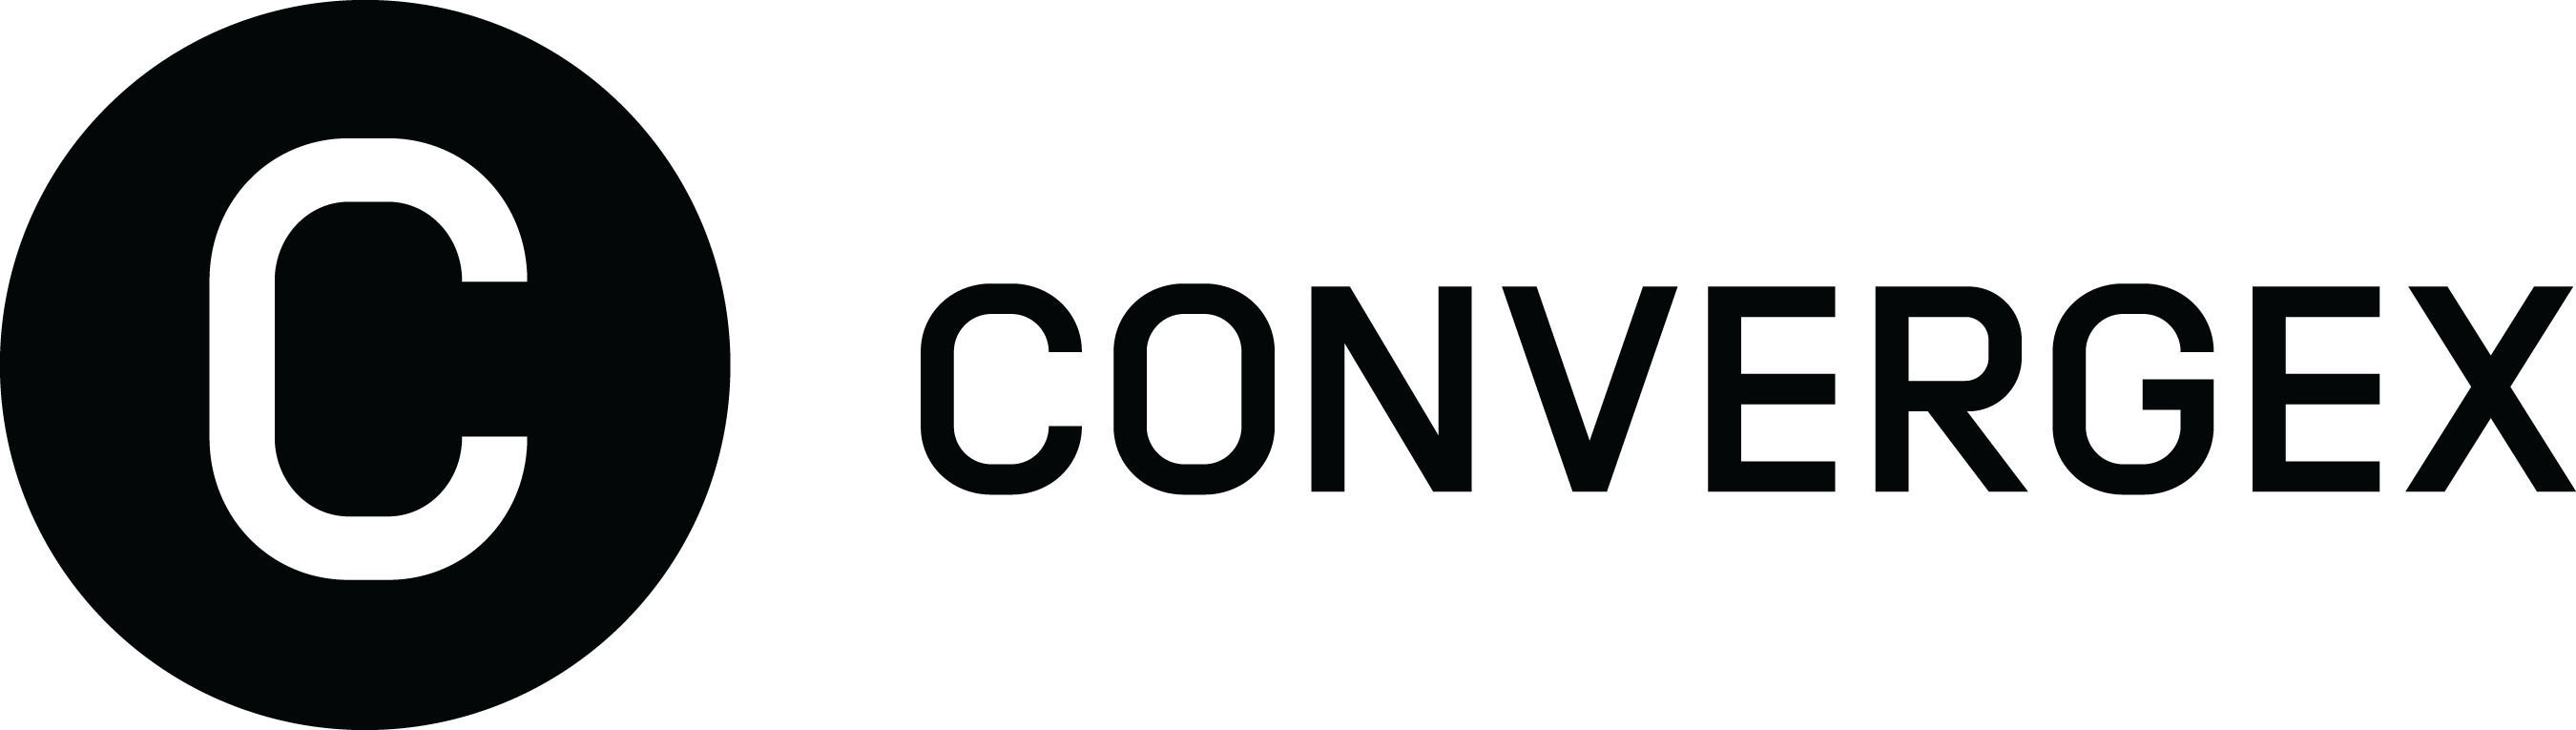 Convergex logo (PRNewsFoto/Convergex) (PRNewsFoto/Convergex)